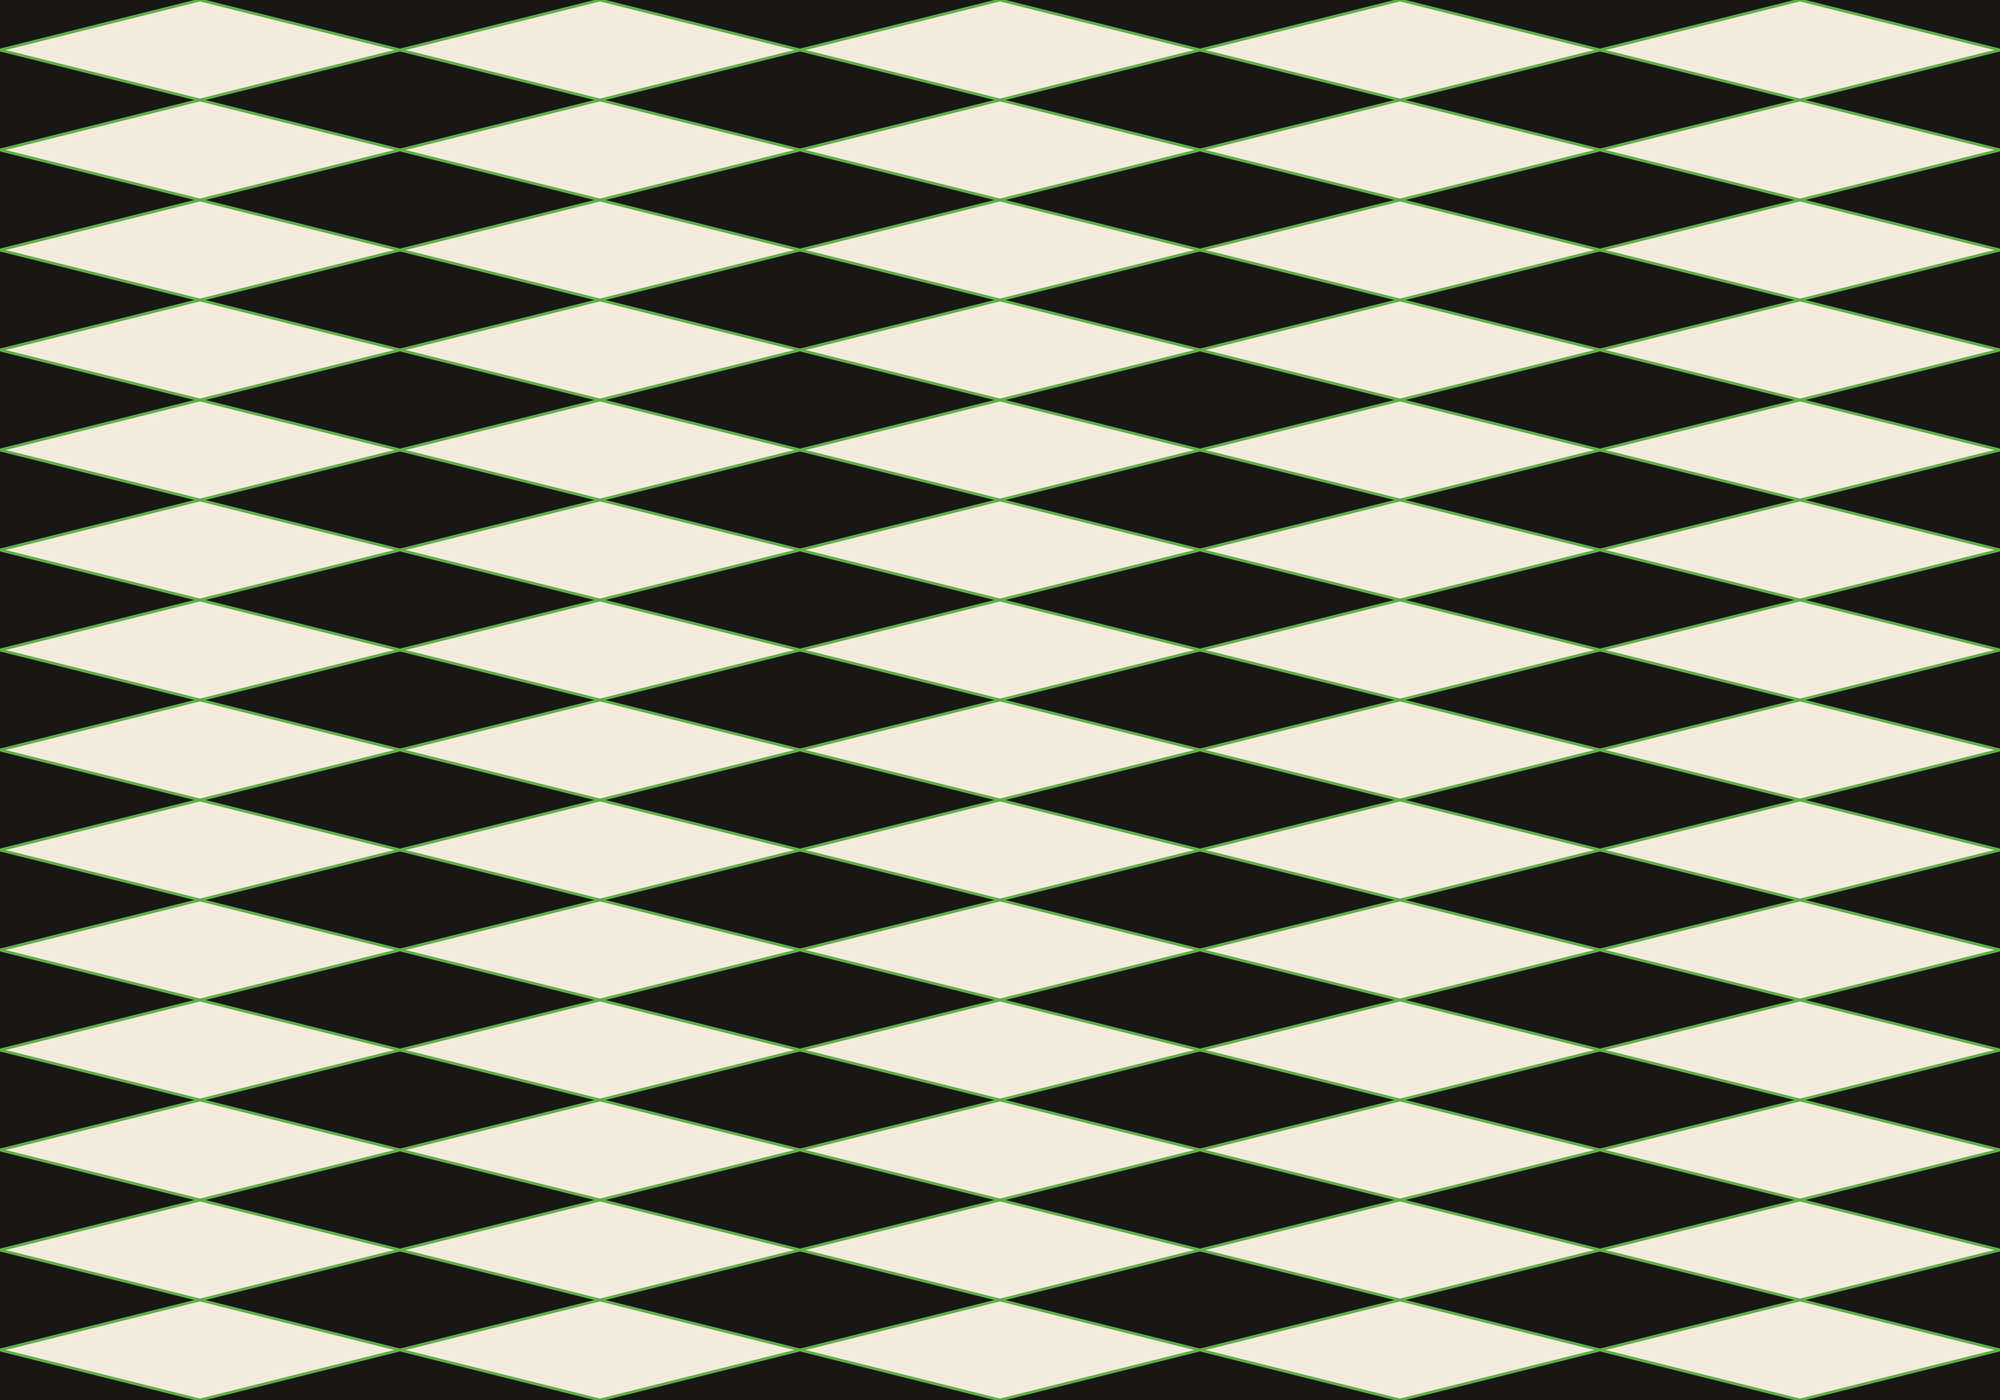             Graphic Wallpaper with Diamonds & Line Patterns - Black, Cream, Green | Matt Smooth Non-woven
        